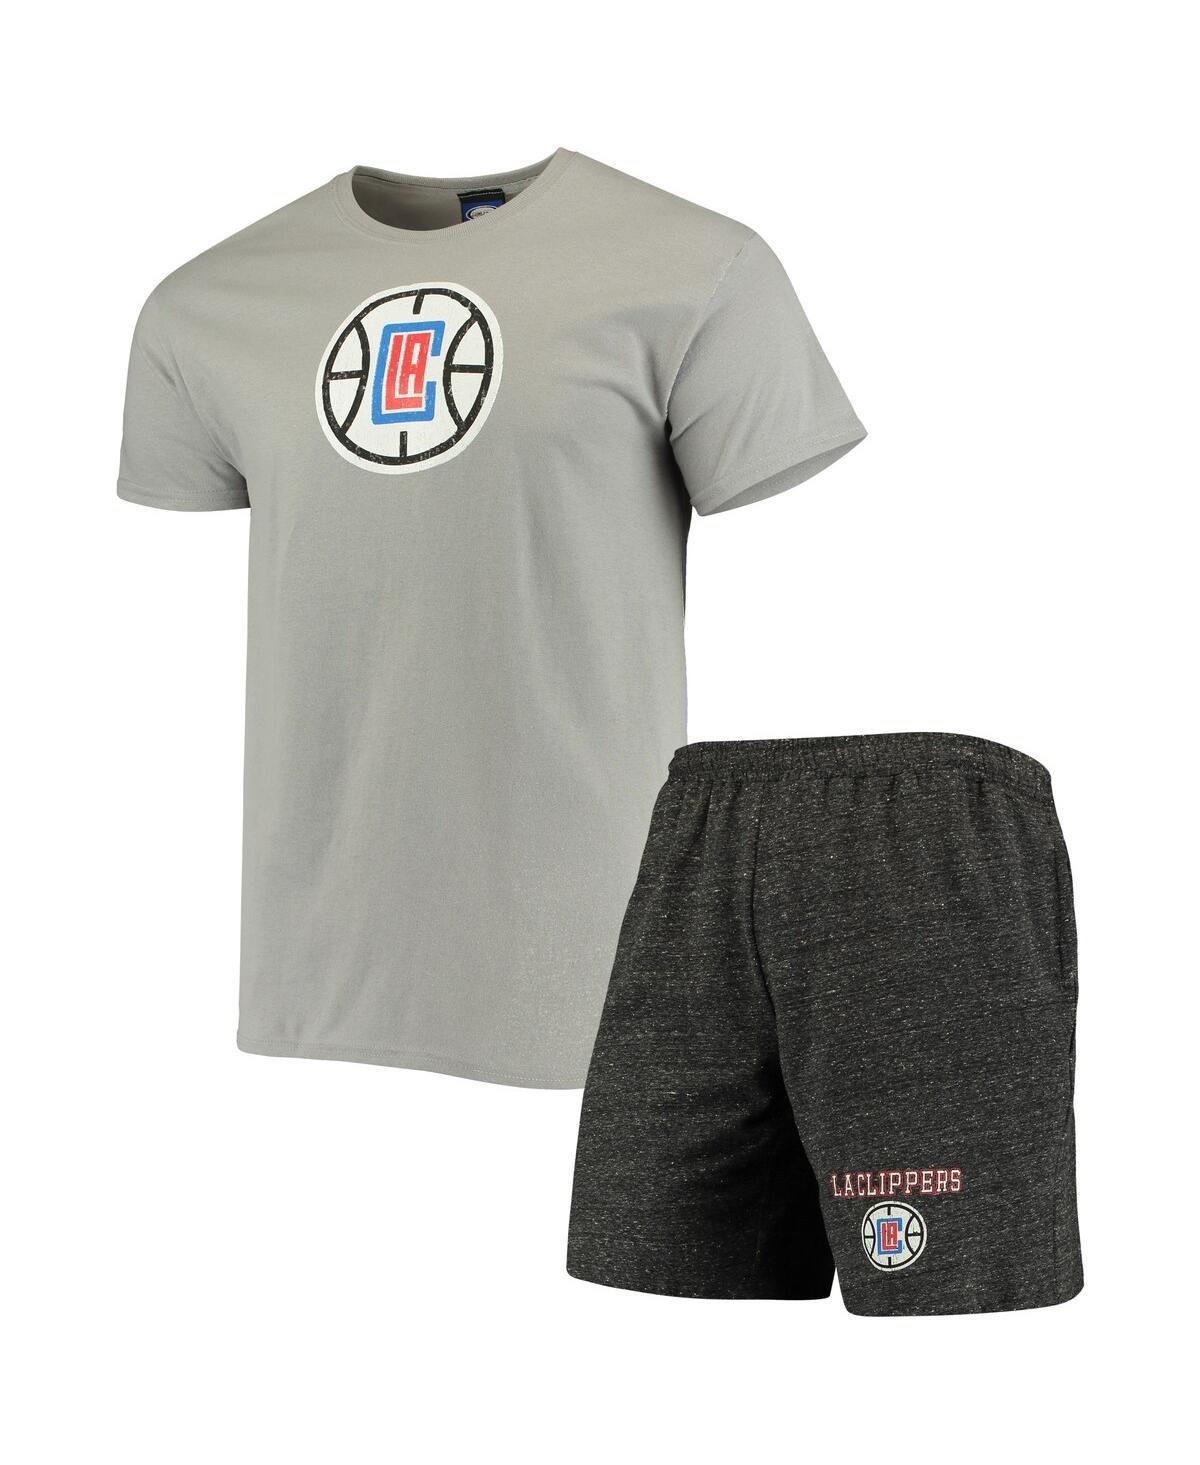 Men's Concepts Sport Green/Heathered Charcoal South Florida Bulls Meter Long Sleeve T-Shirt & Pants Sleep Set Size: Large